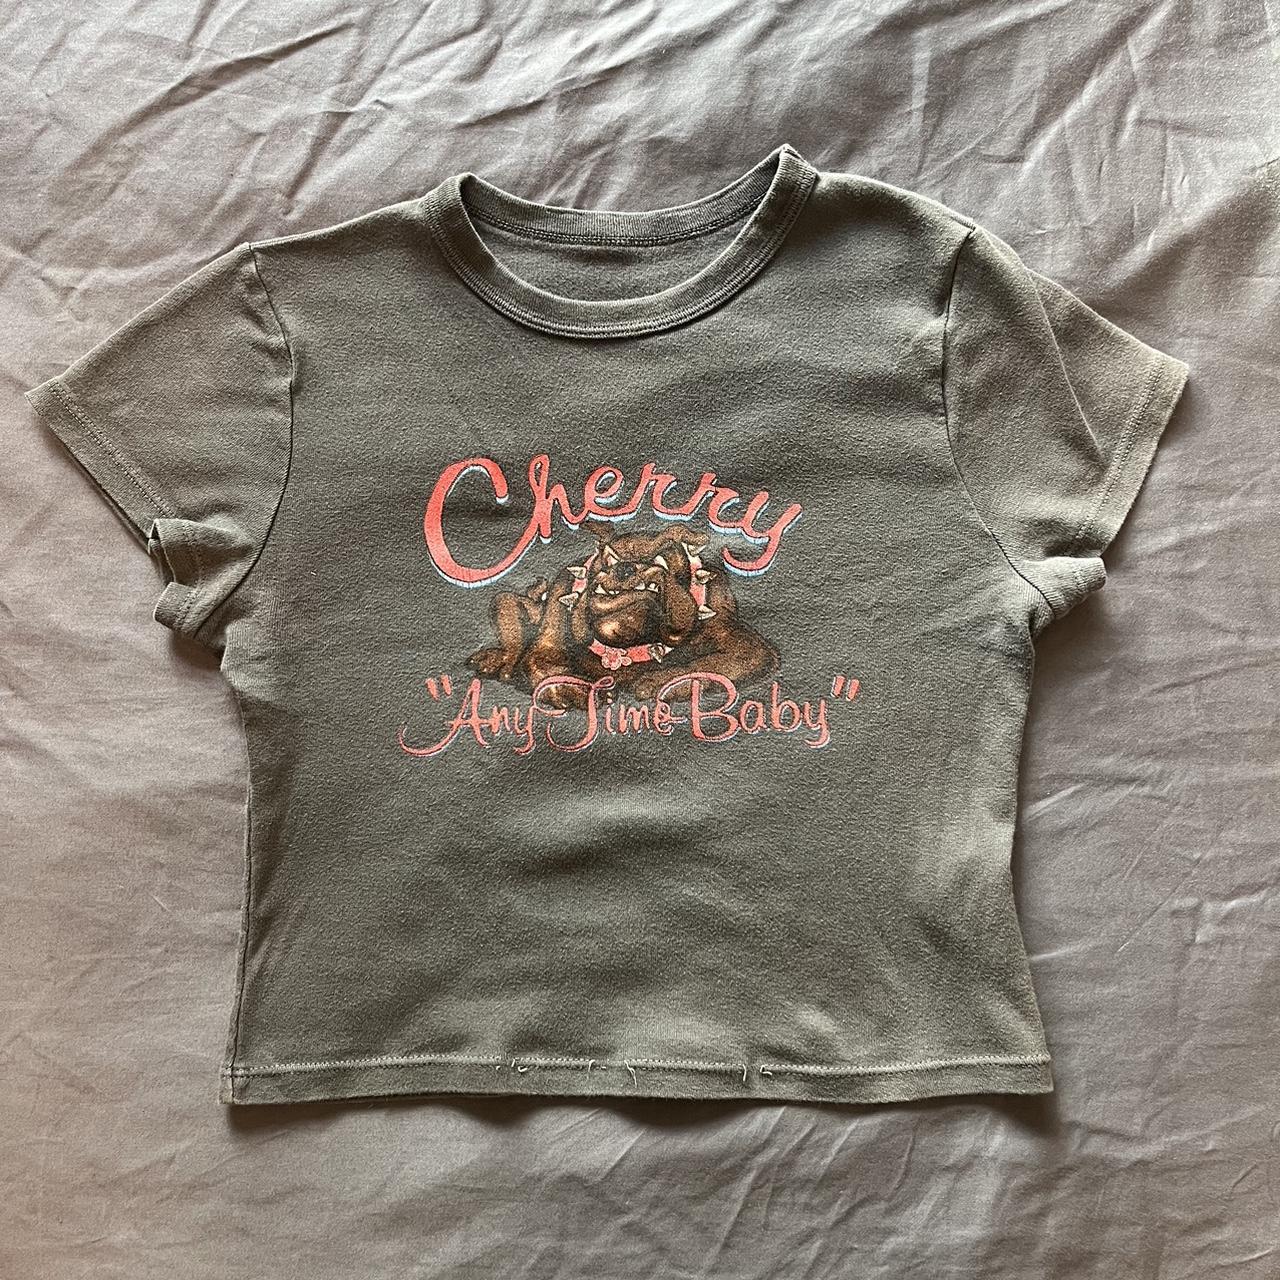 Sweatpants – CHERRY LA